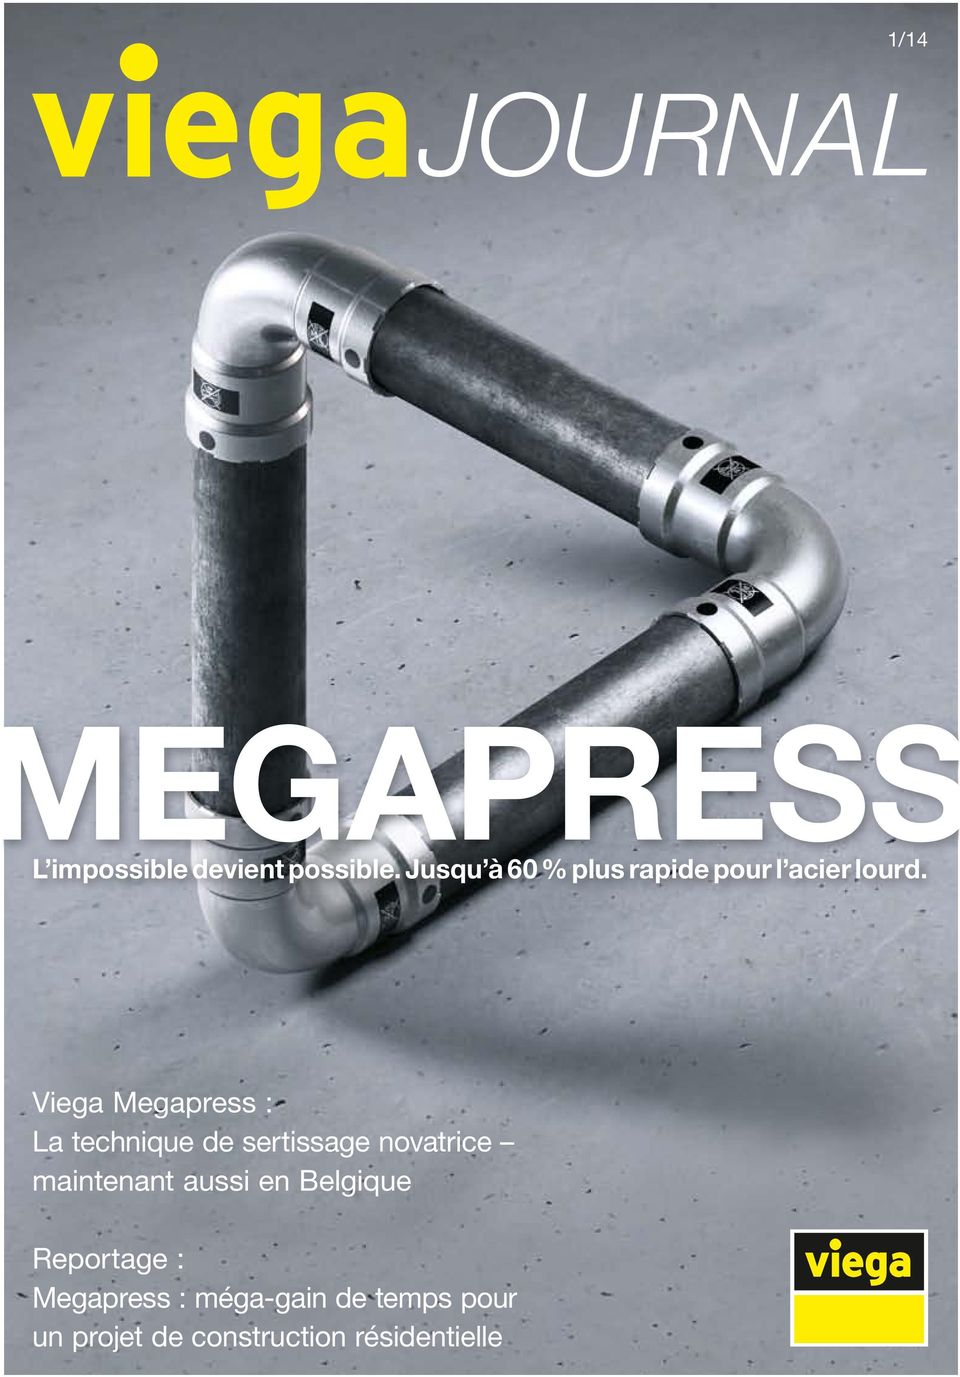 Viega Megapress : La technique de sertissage novatrice maintenant